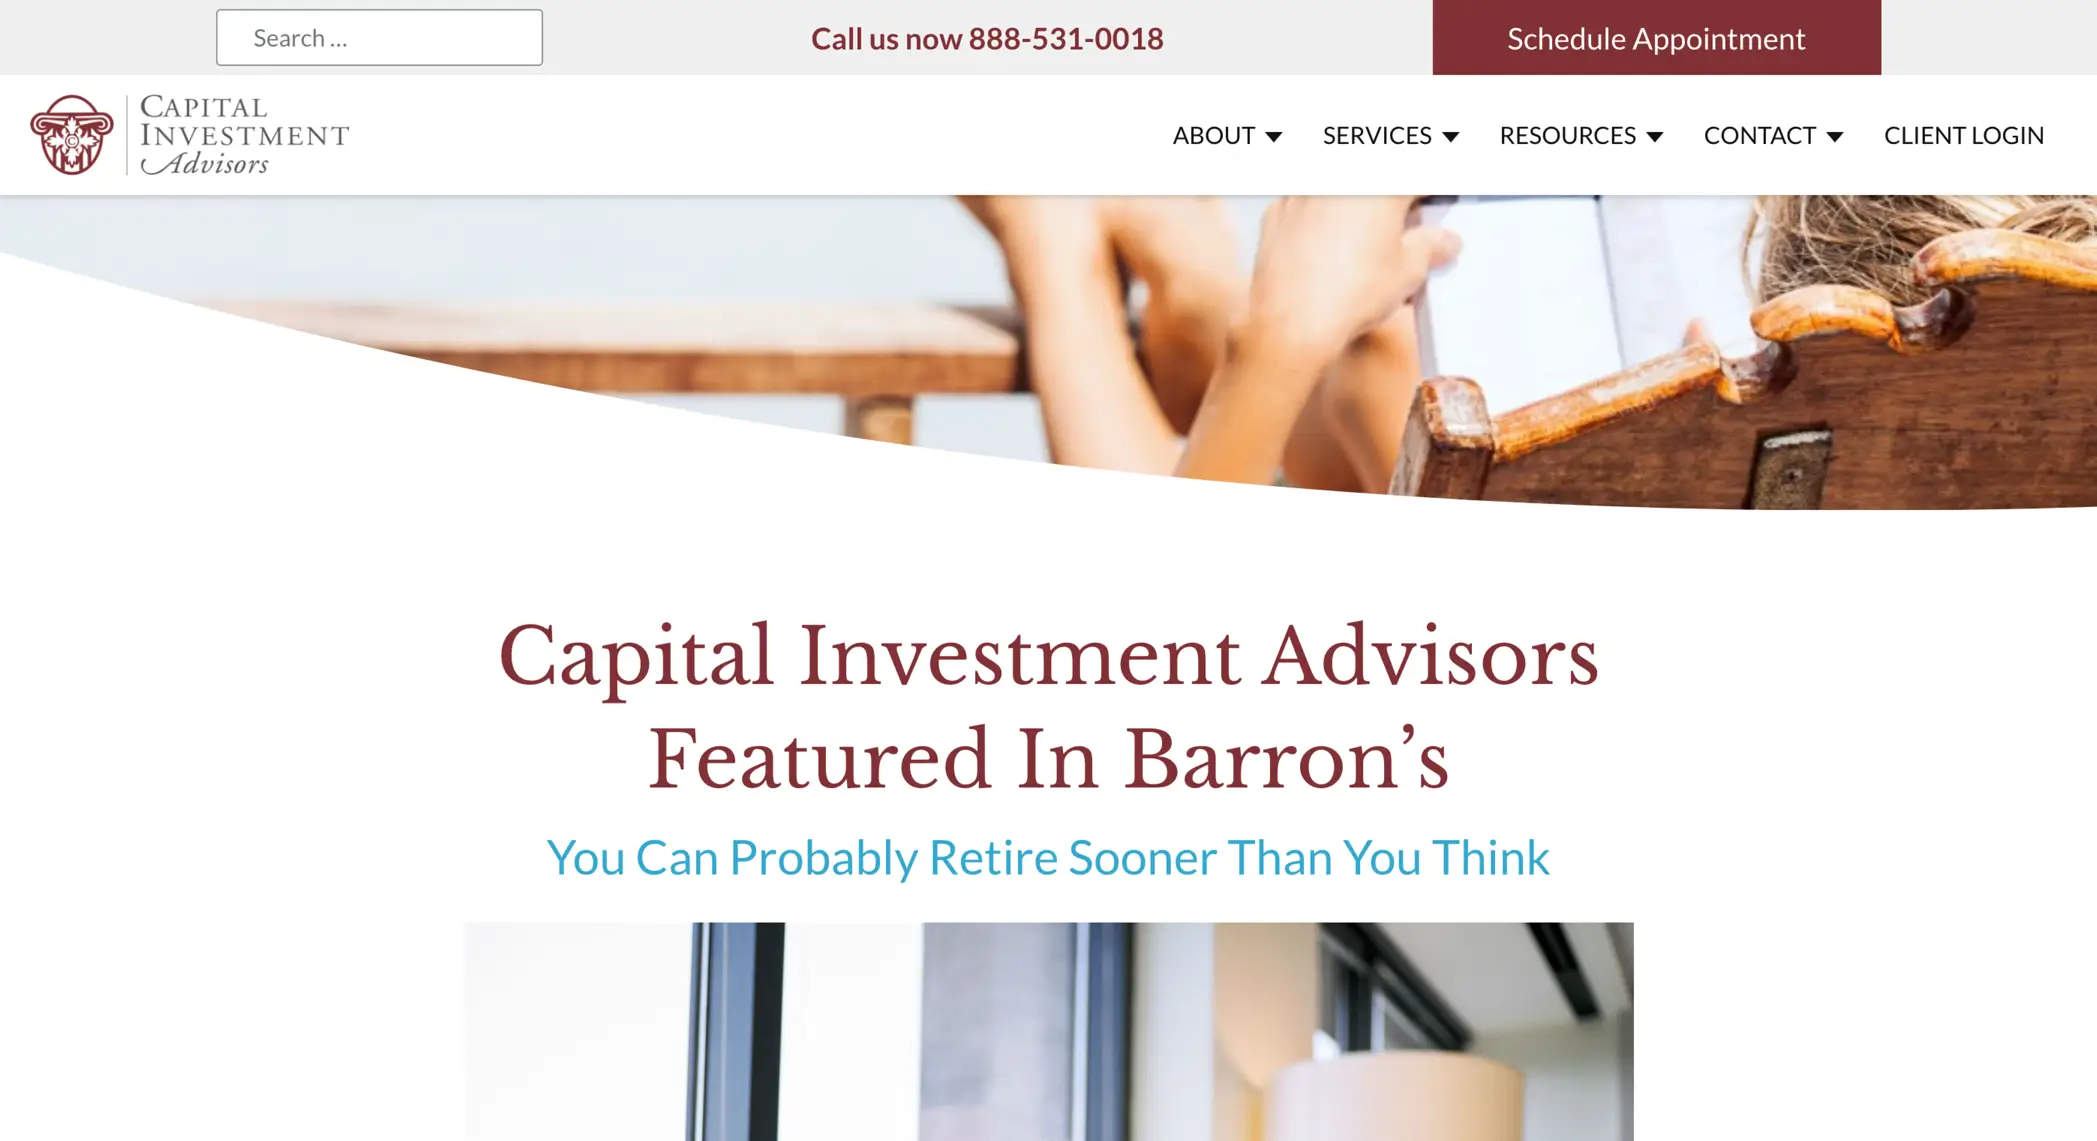 CapitalInvestmentAdvisors